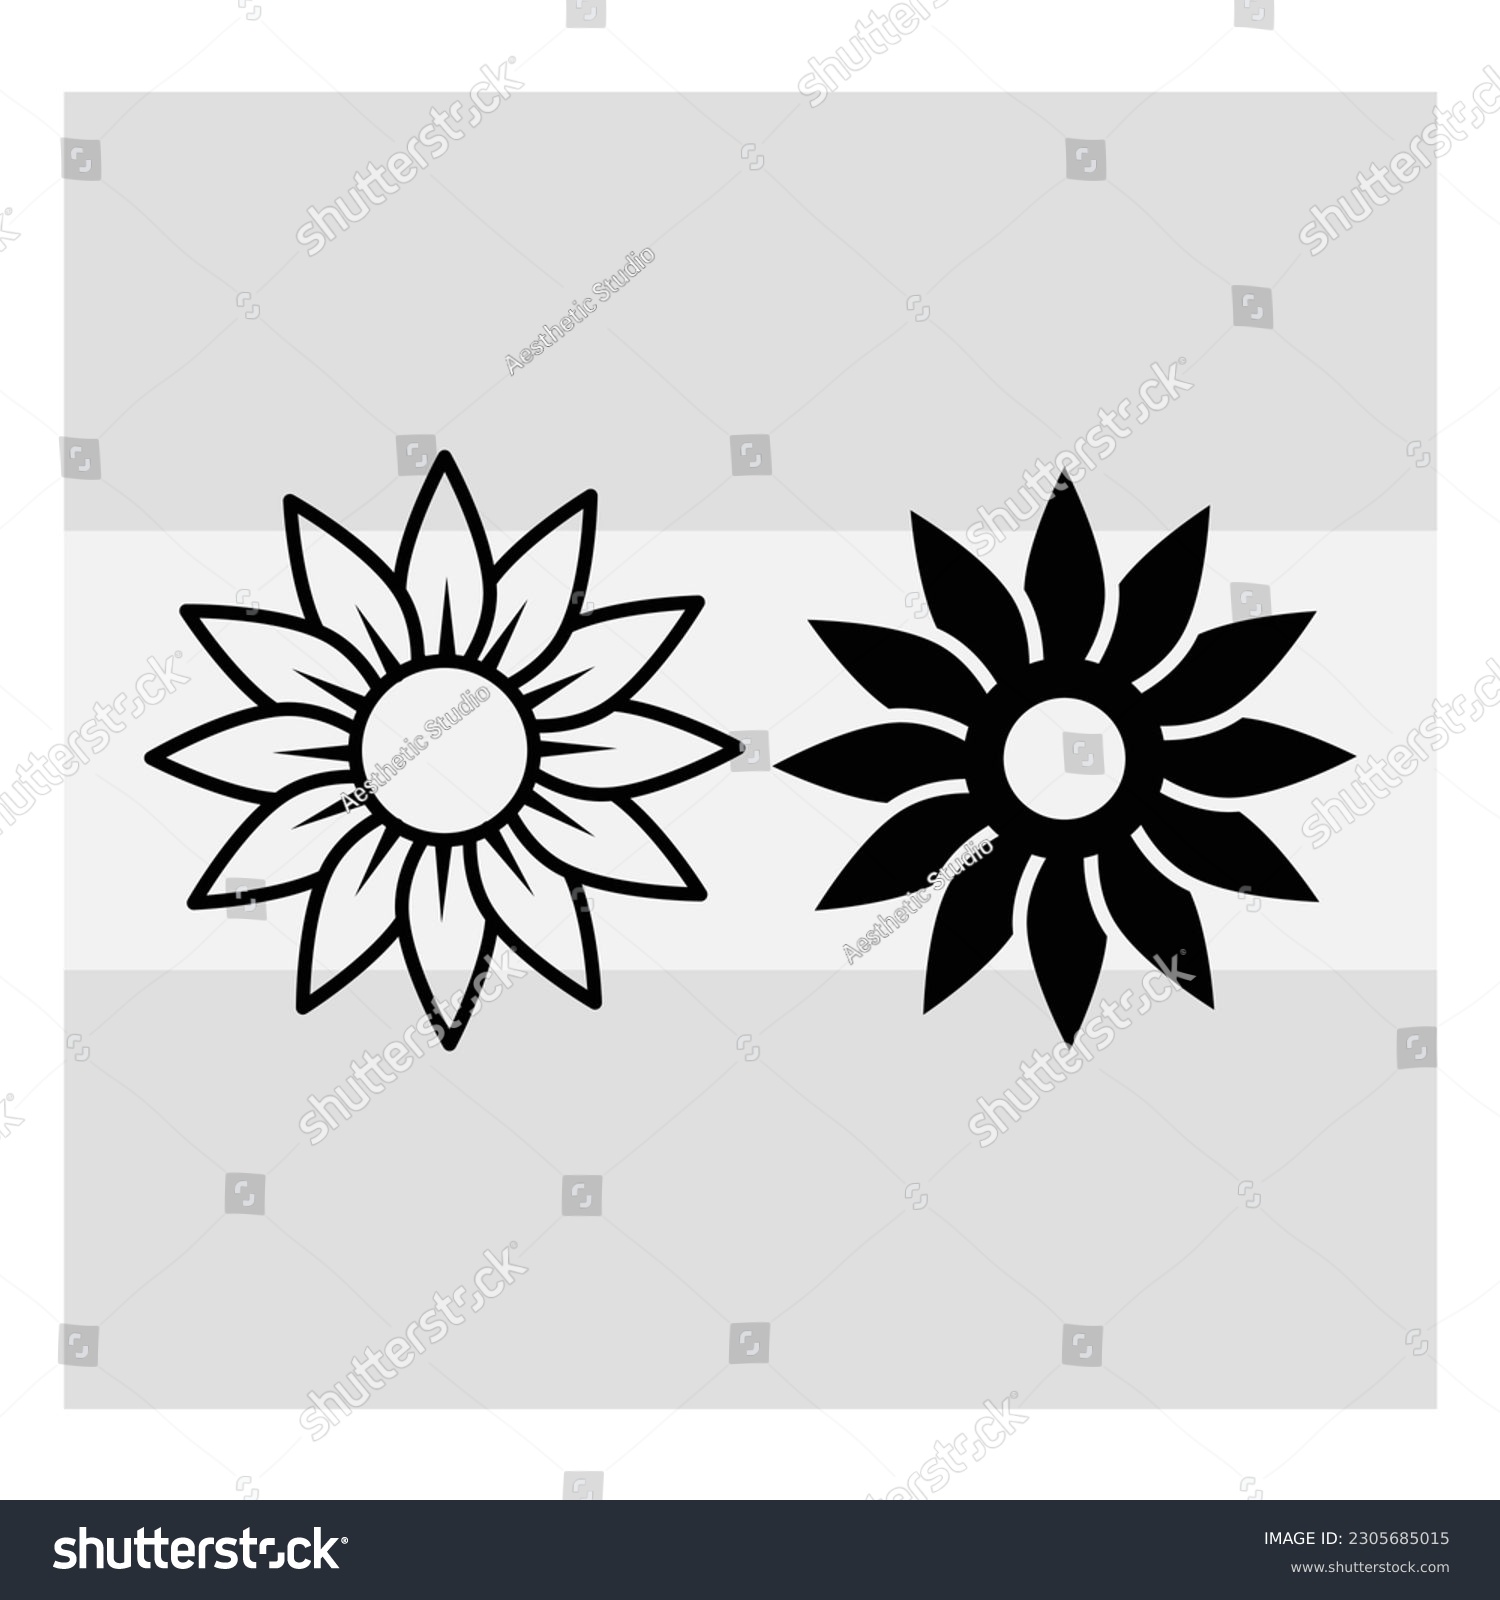 SVG of Flowers, Flowers SVG Bundle, Flowers Clipart, Leaves svg, Circut Cut Files Silhouette, Rose, Hibiscus Svg, Flower Silhouette, Sunflower, Vcetor, Flower Outline, Eps, Cut file svg